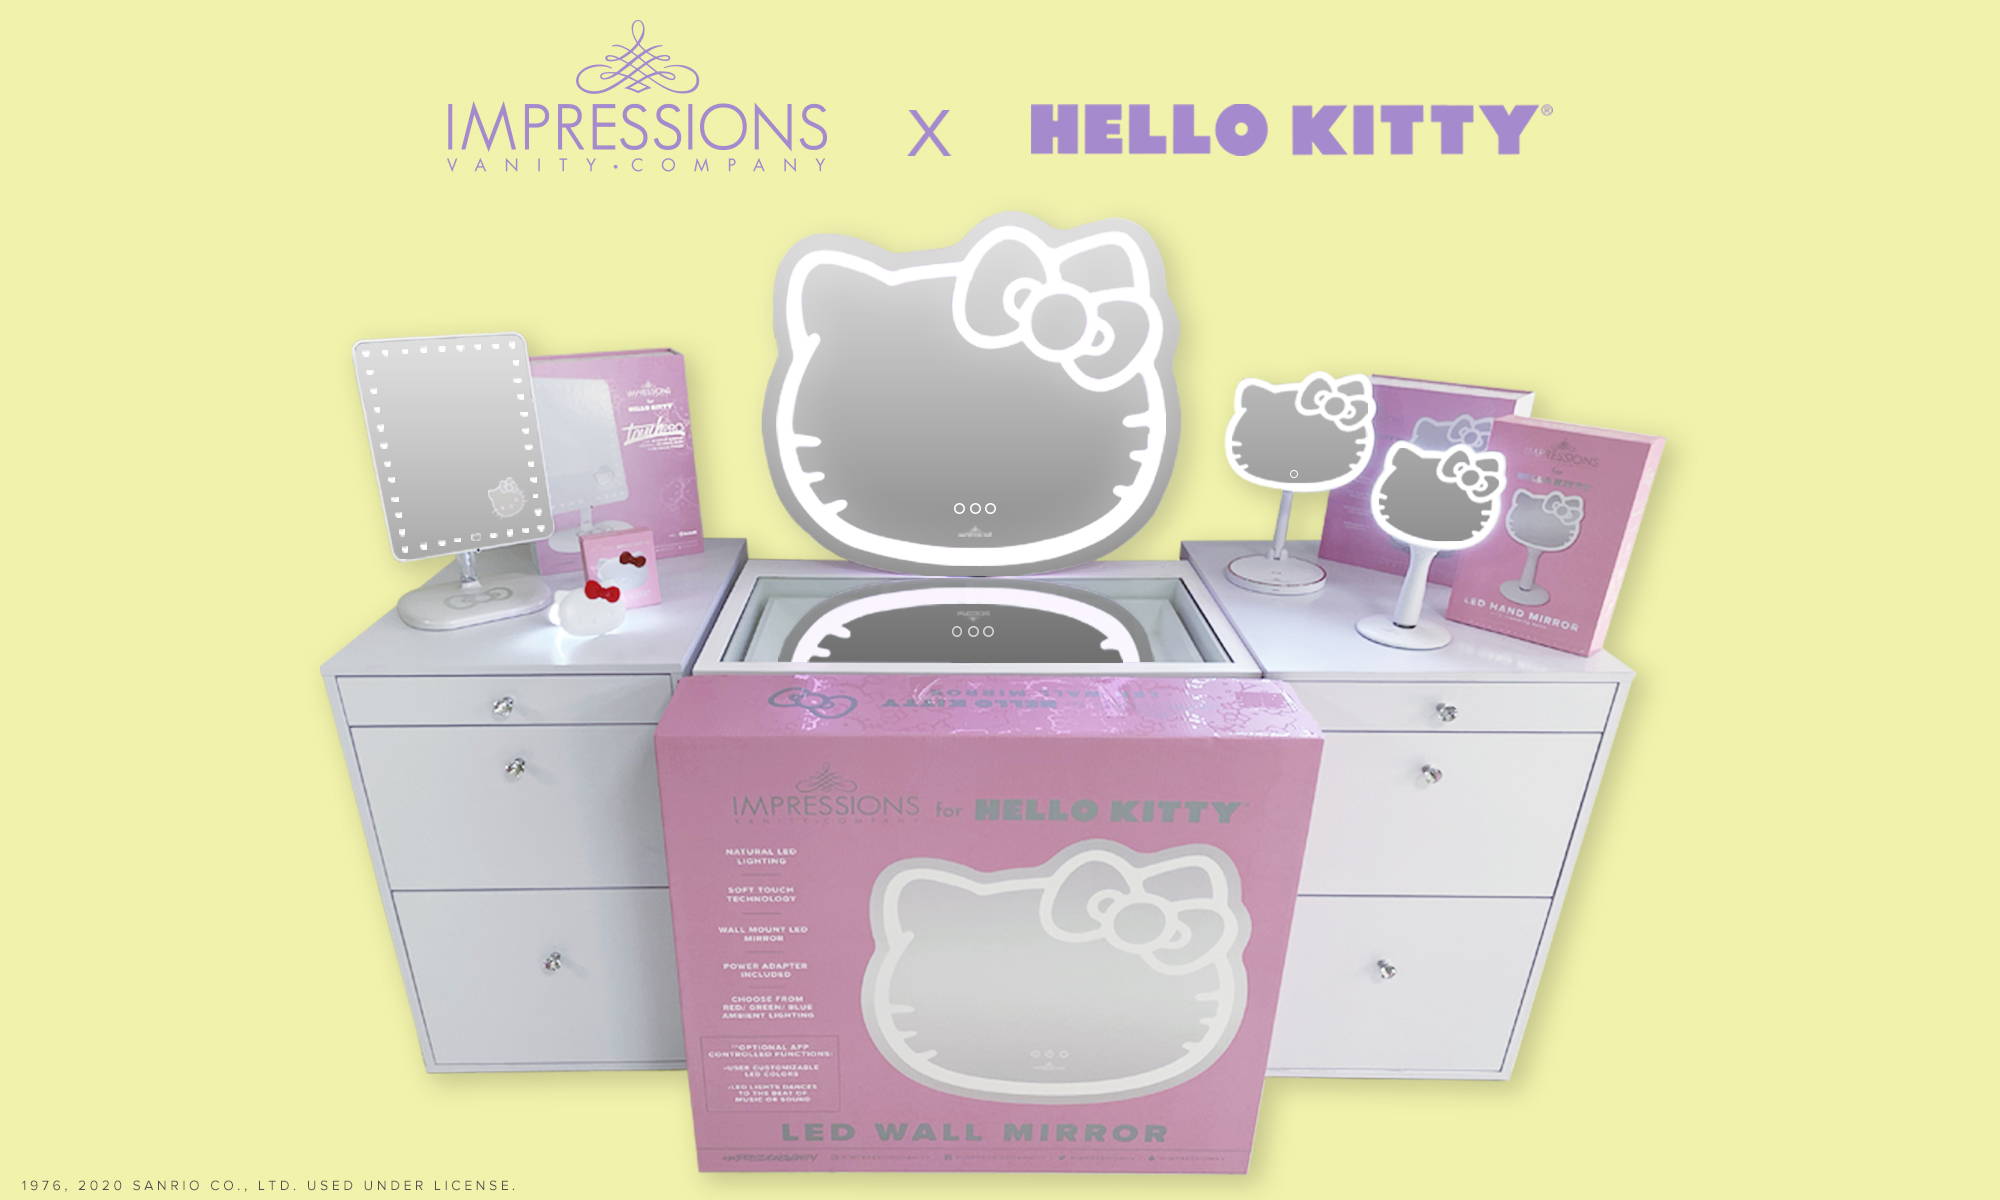 impressions x hello kitty